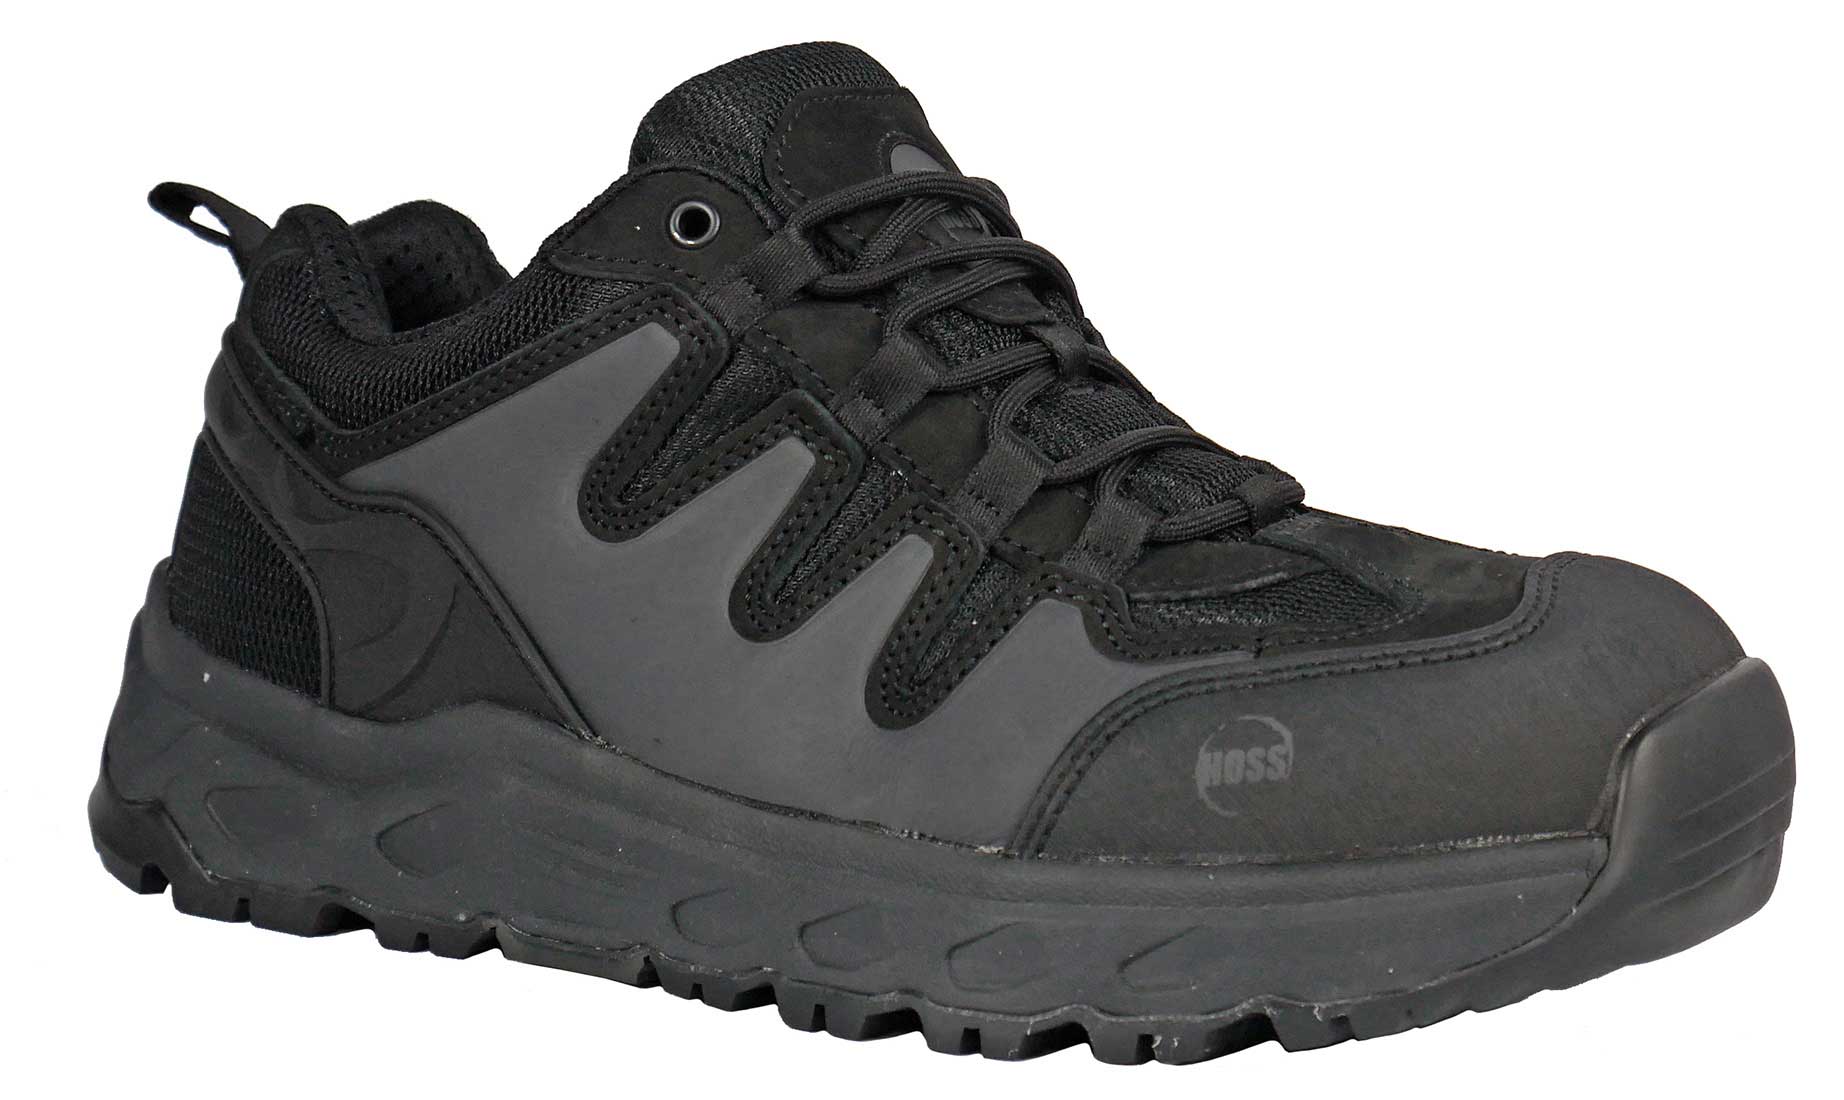 Hoss Boots Eric Lo Black - 50138 - Men's 3 Aluminum Toe Wedge Sole Work Hiker Boot